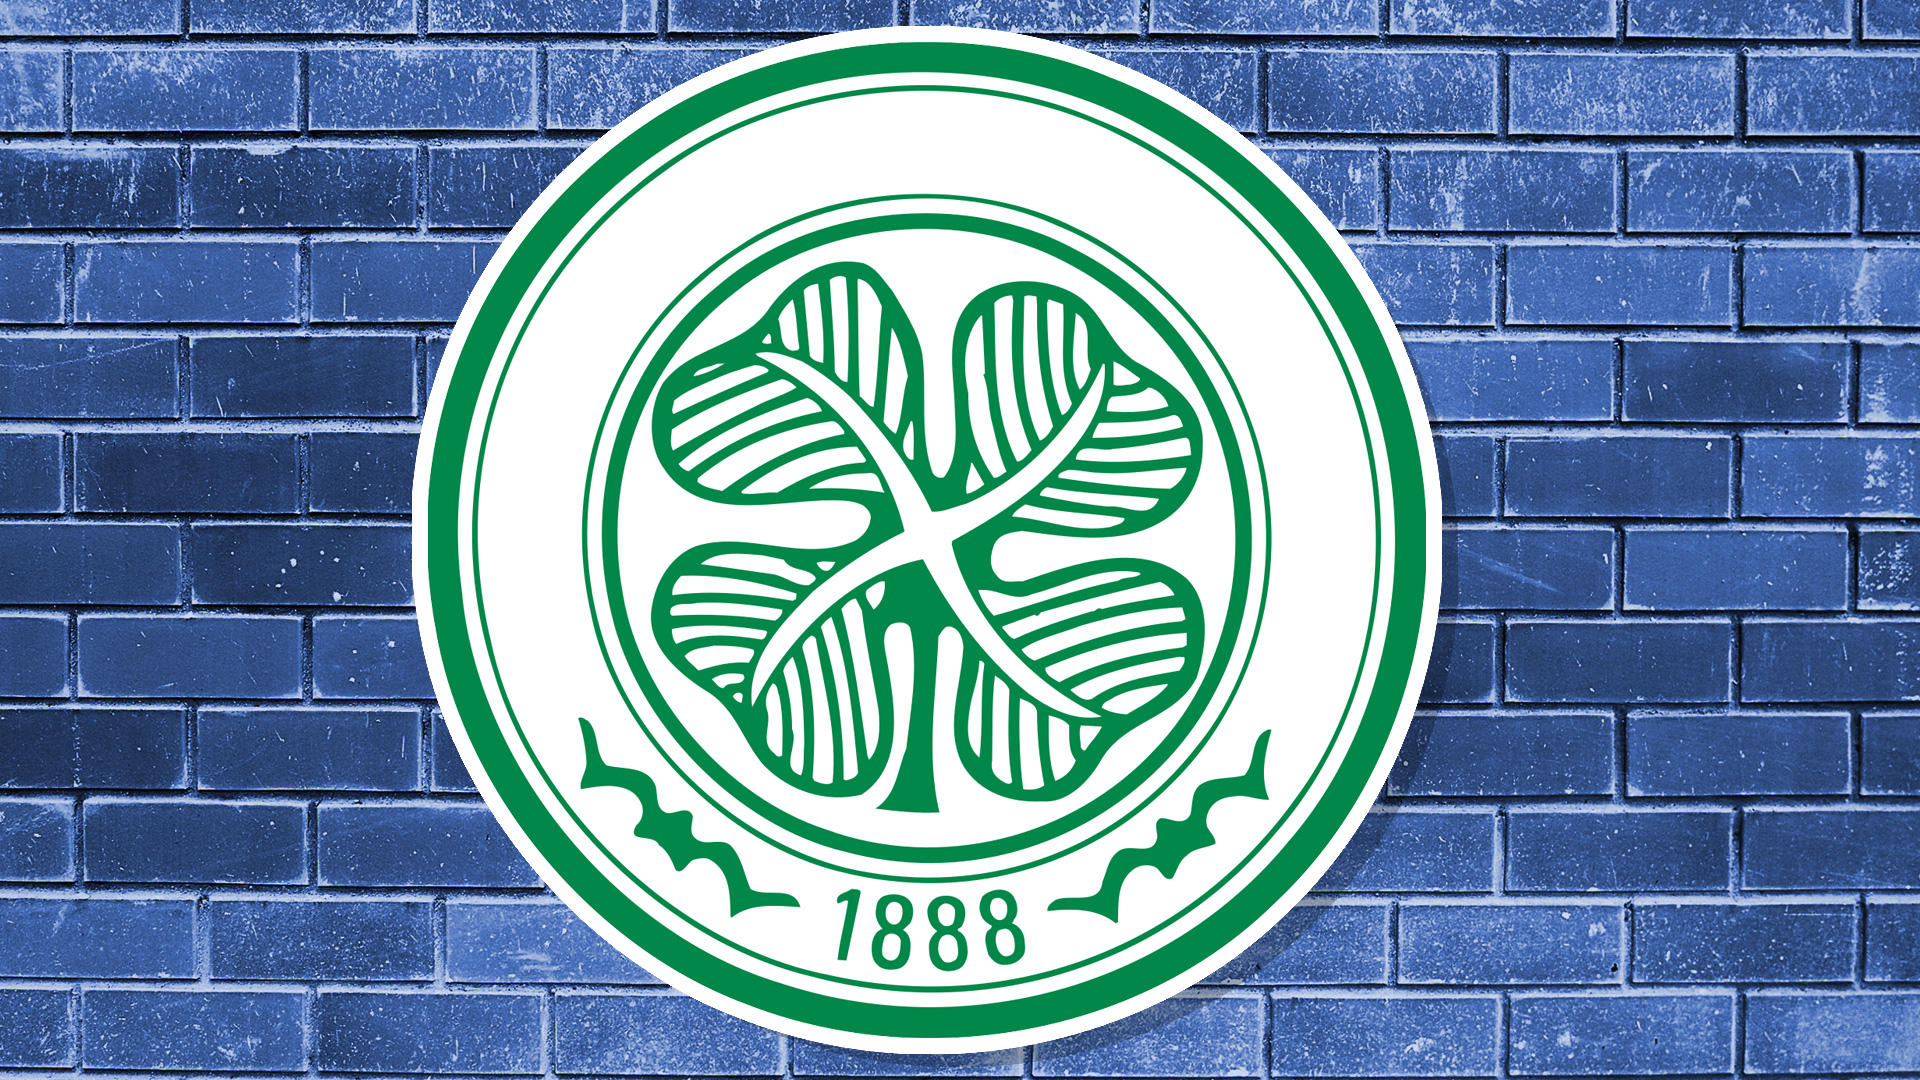 A Scottish football badge